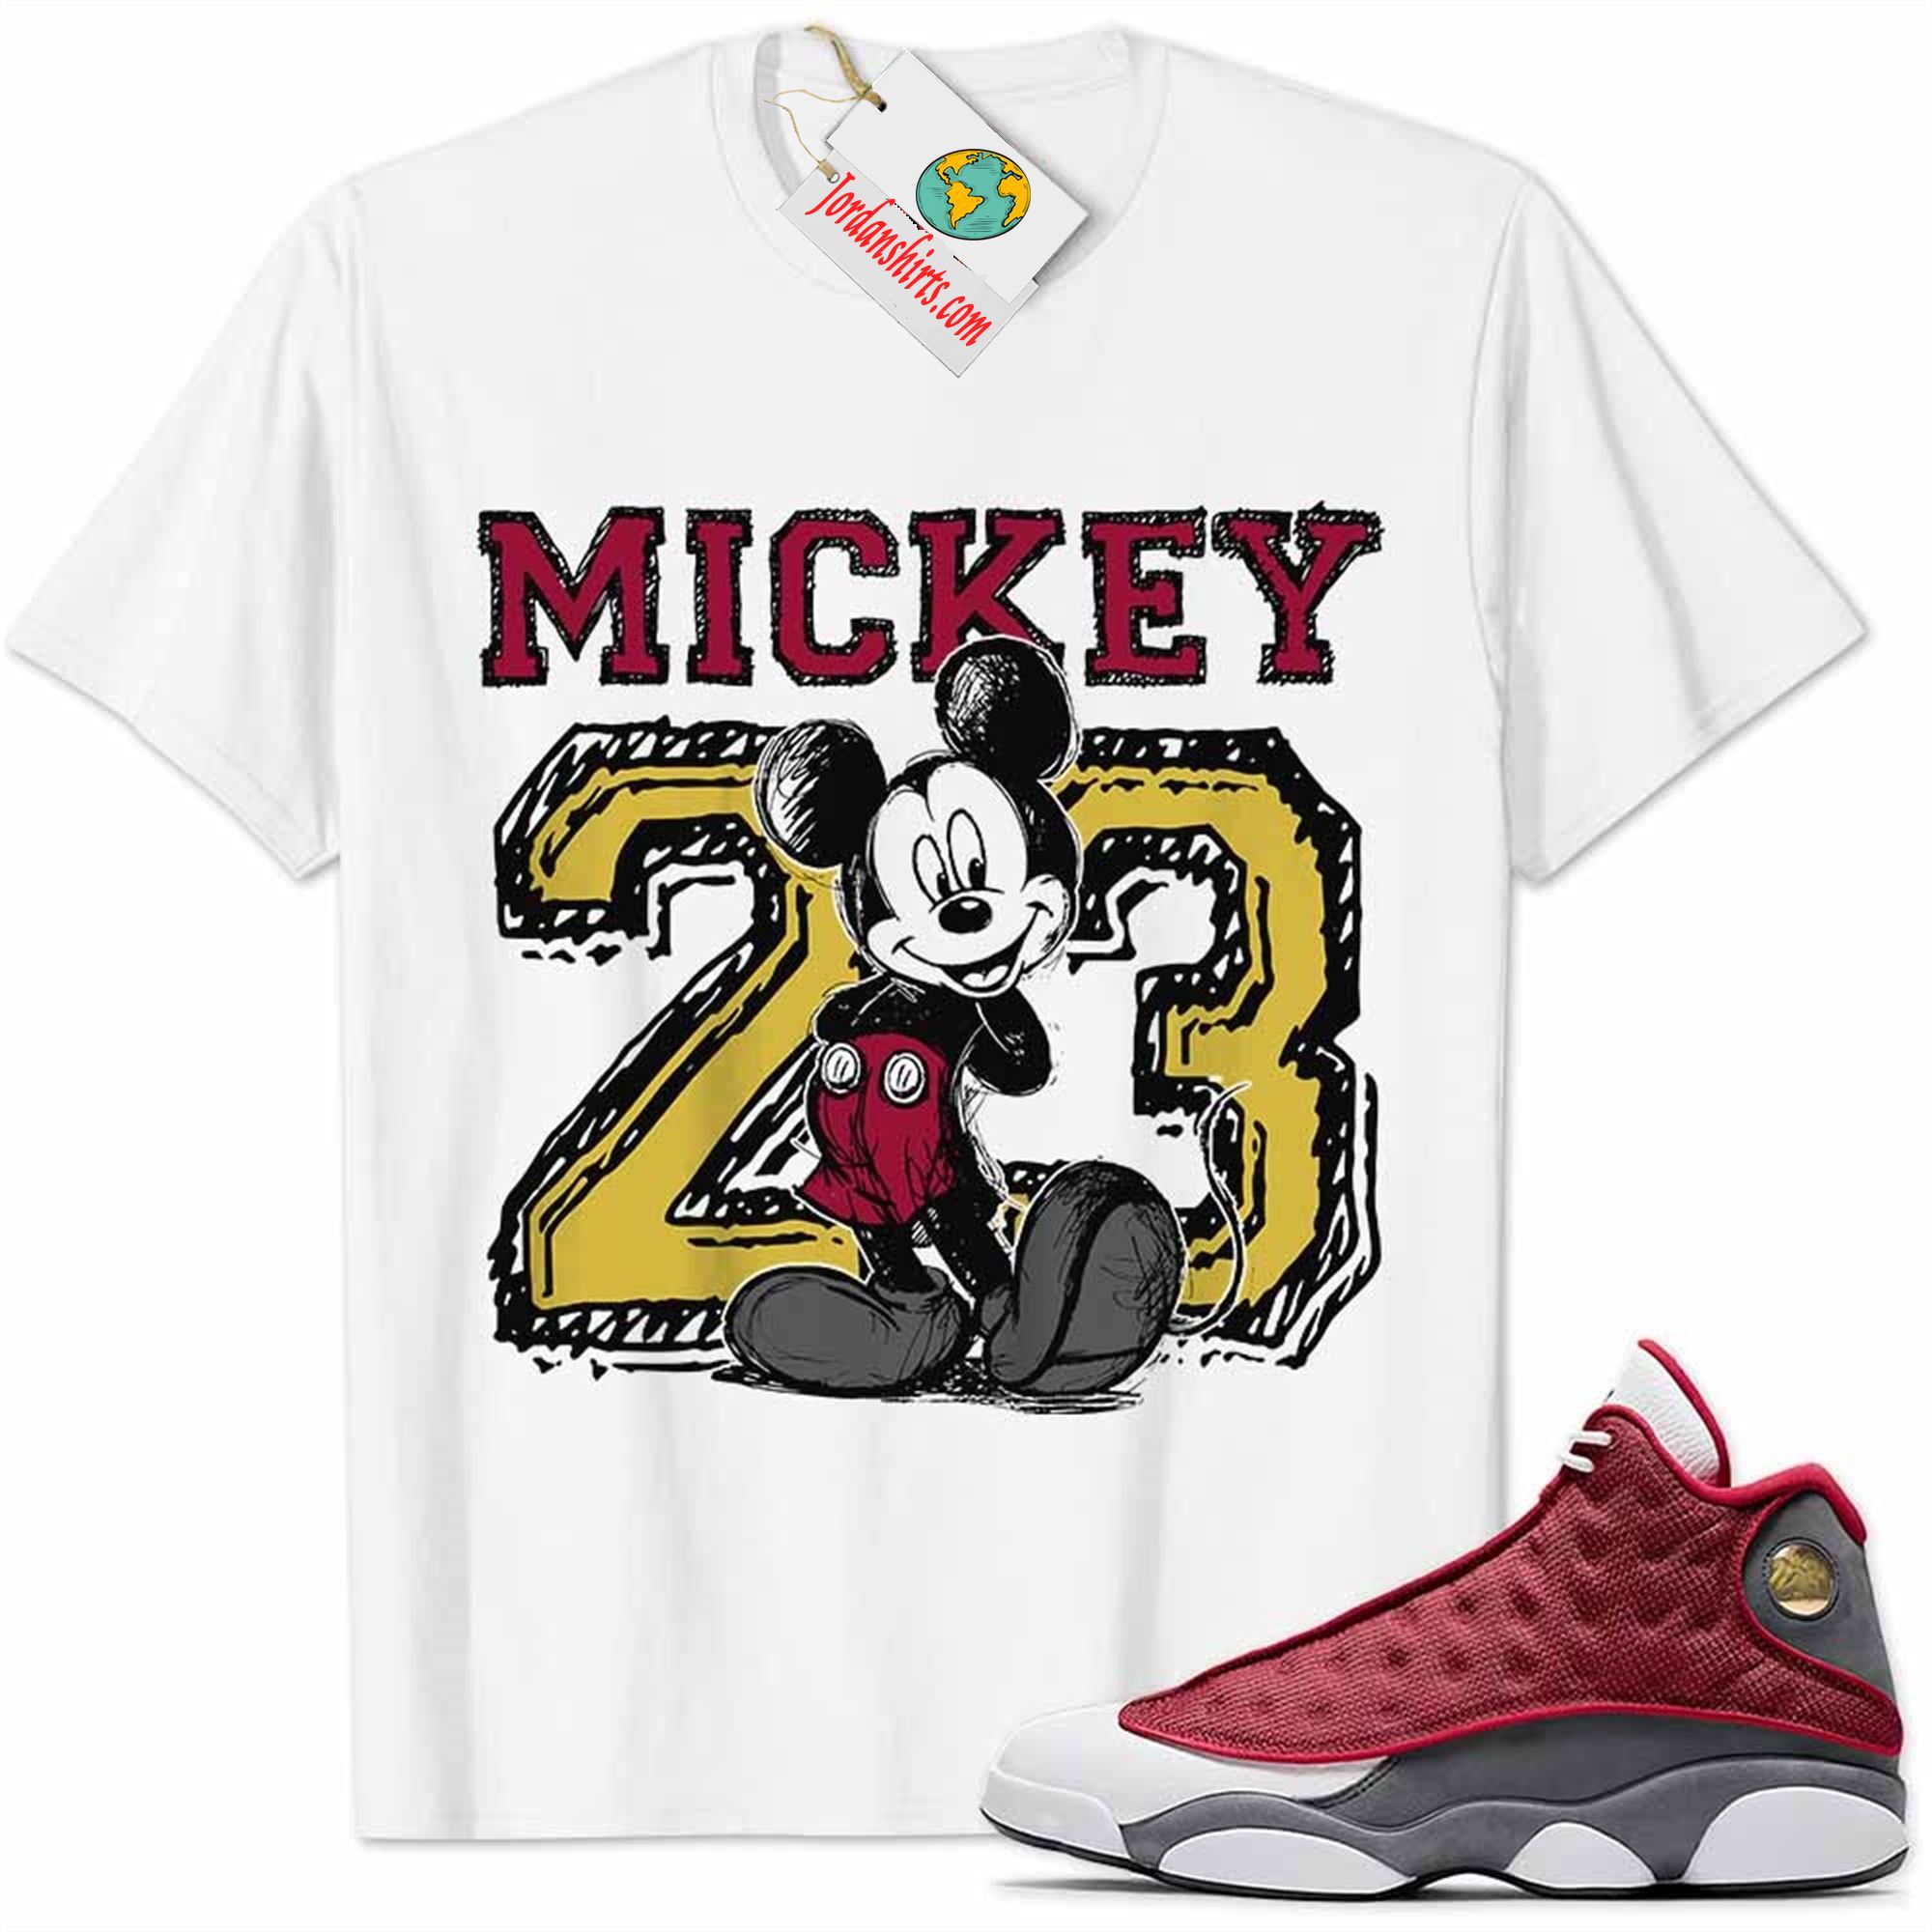 Jordan 13 Shirt, Red Flint 13s Shirt Mickey 23 Michael Jordan Number Draw White Full Size Up To 5xl